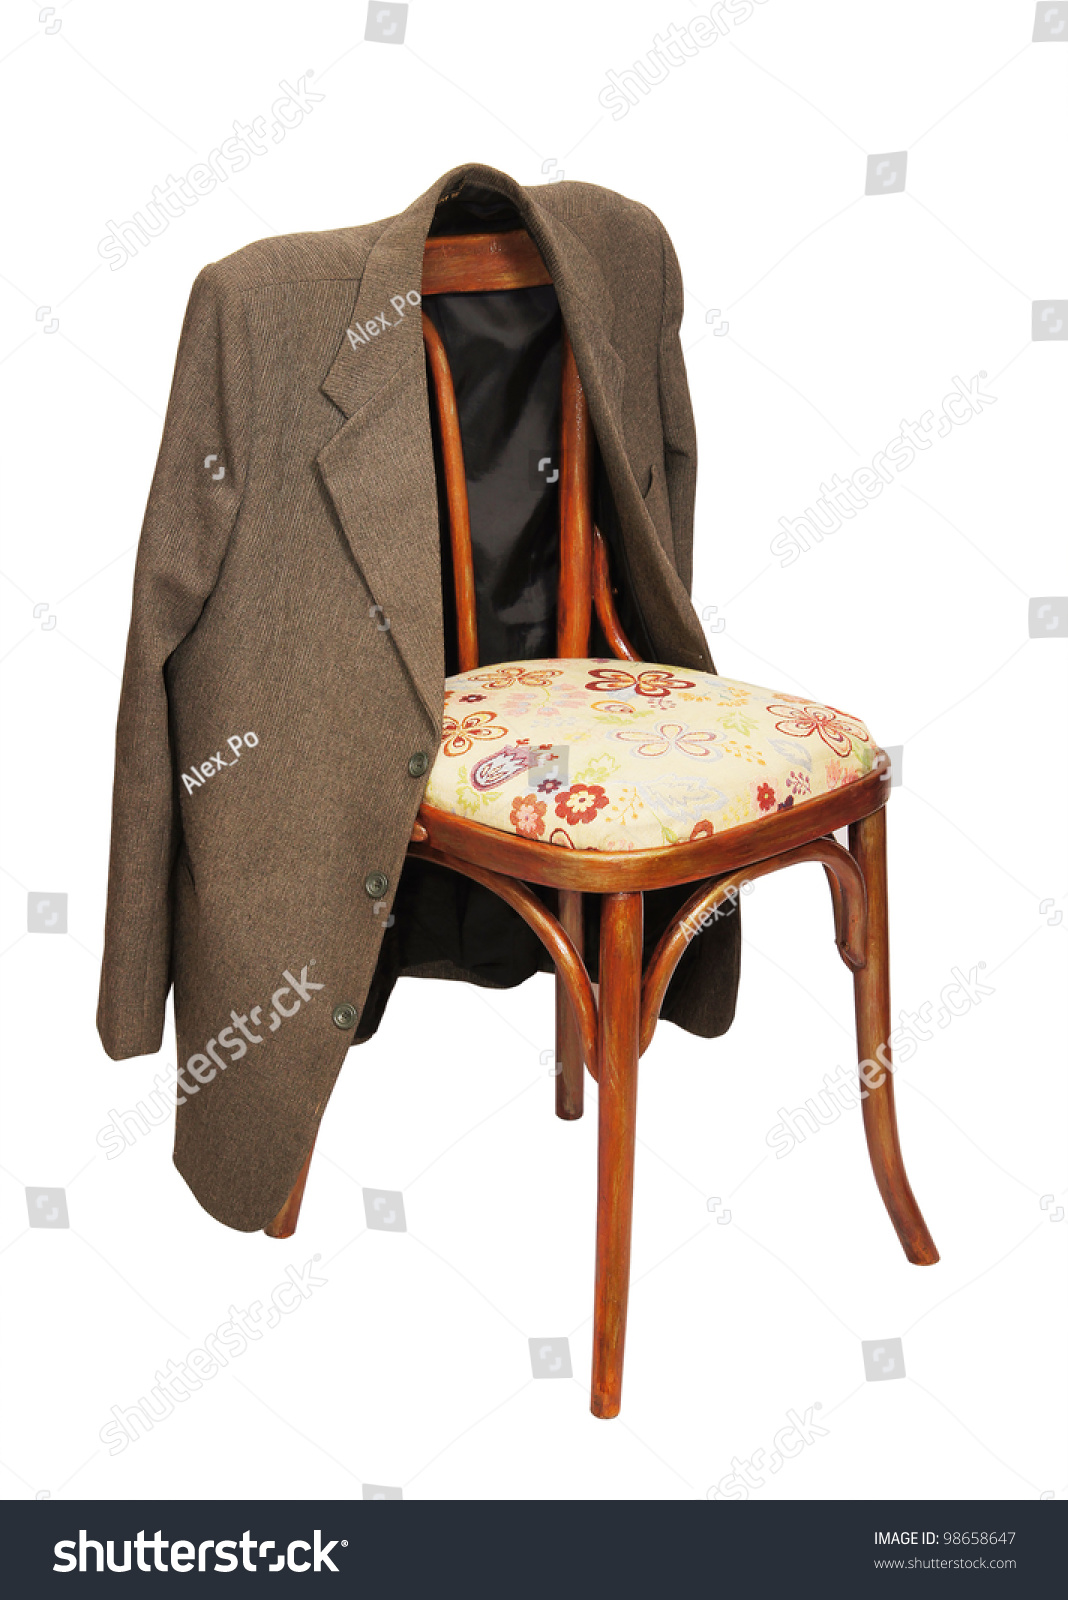 Пиджак на стуле